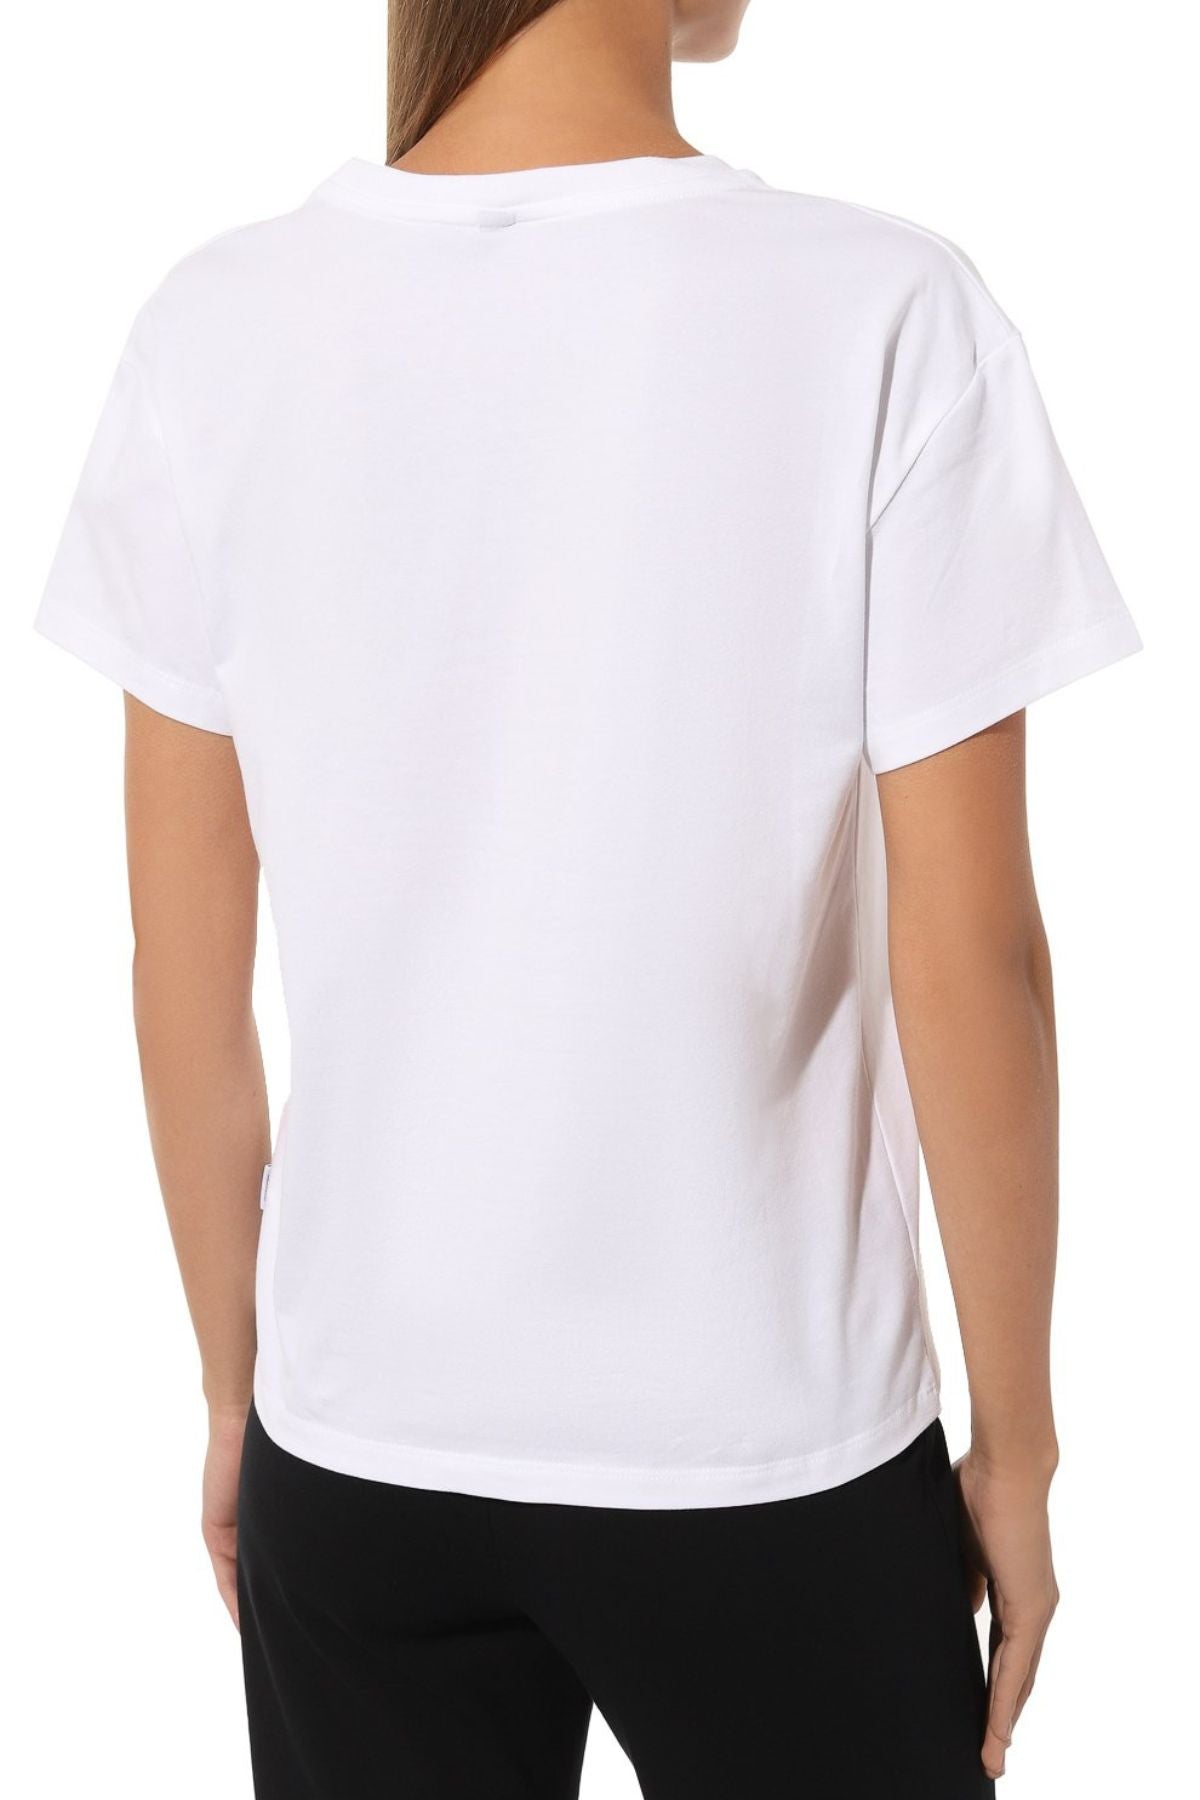 Moschino donna t-shirt 0789 4410 A0001 Bianco